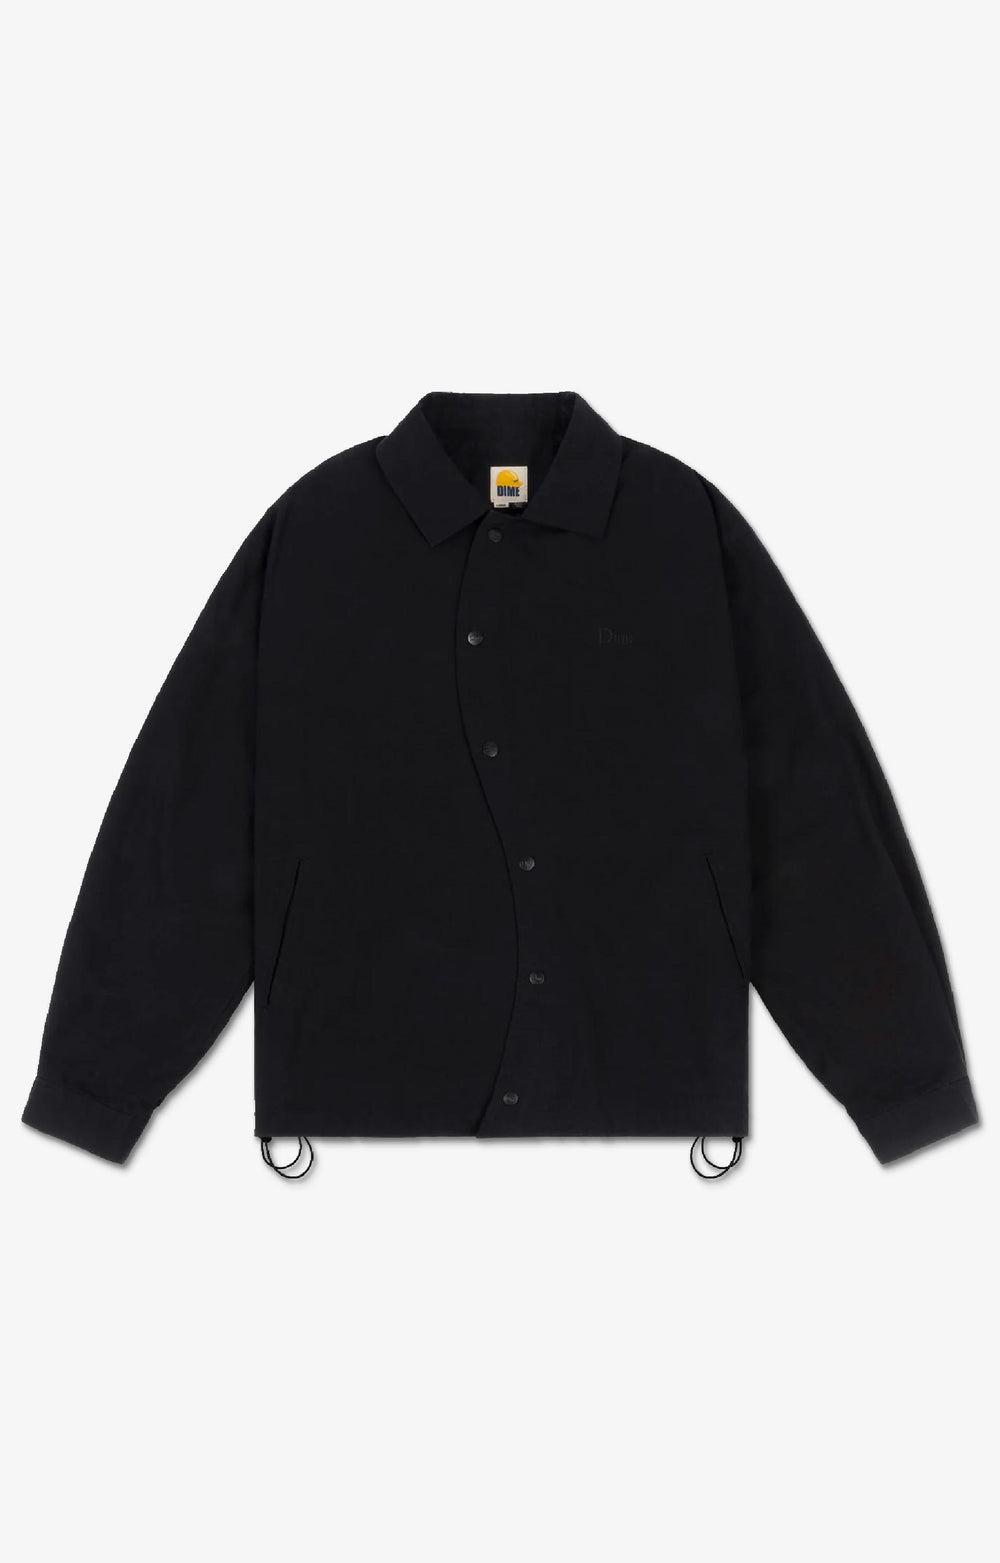 Dime Wave Jacket Outerwear, Black